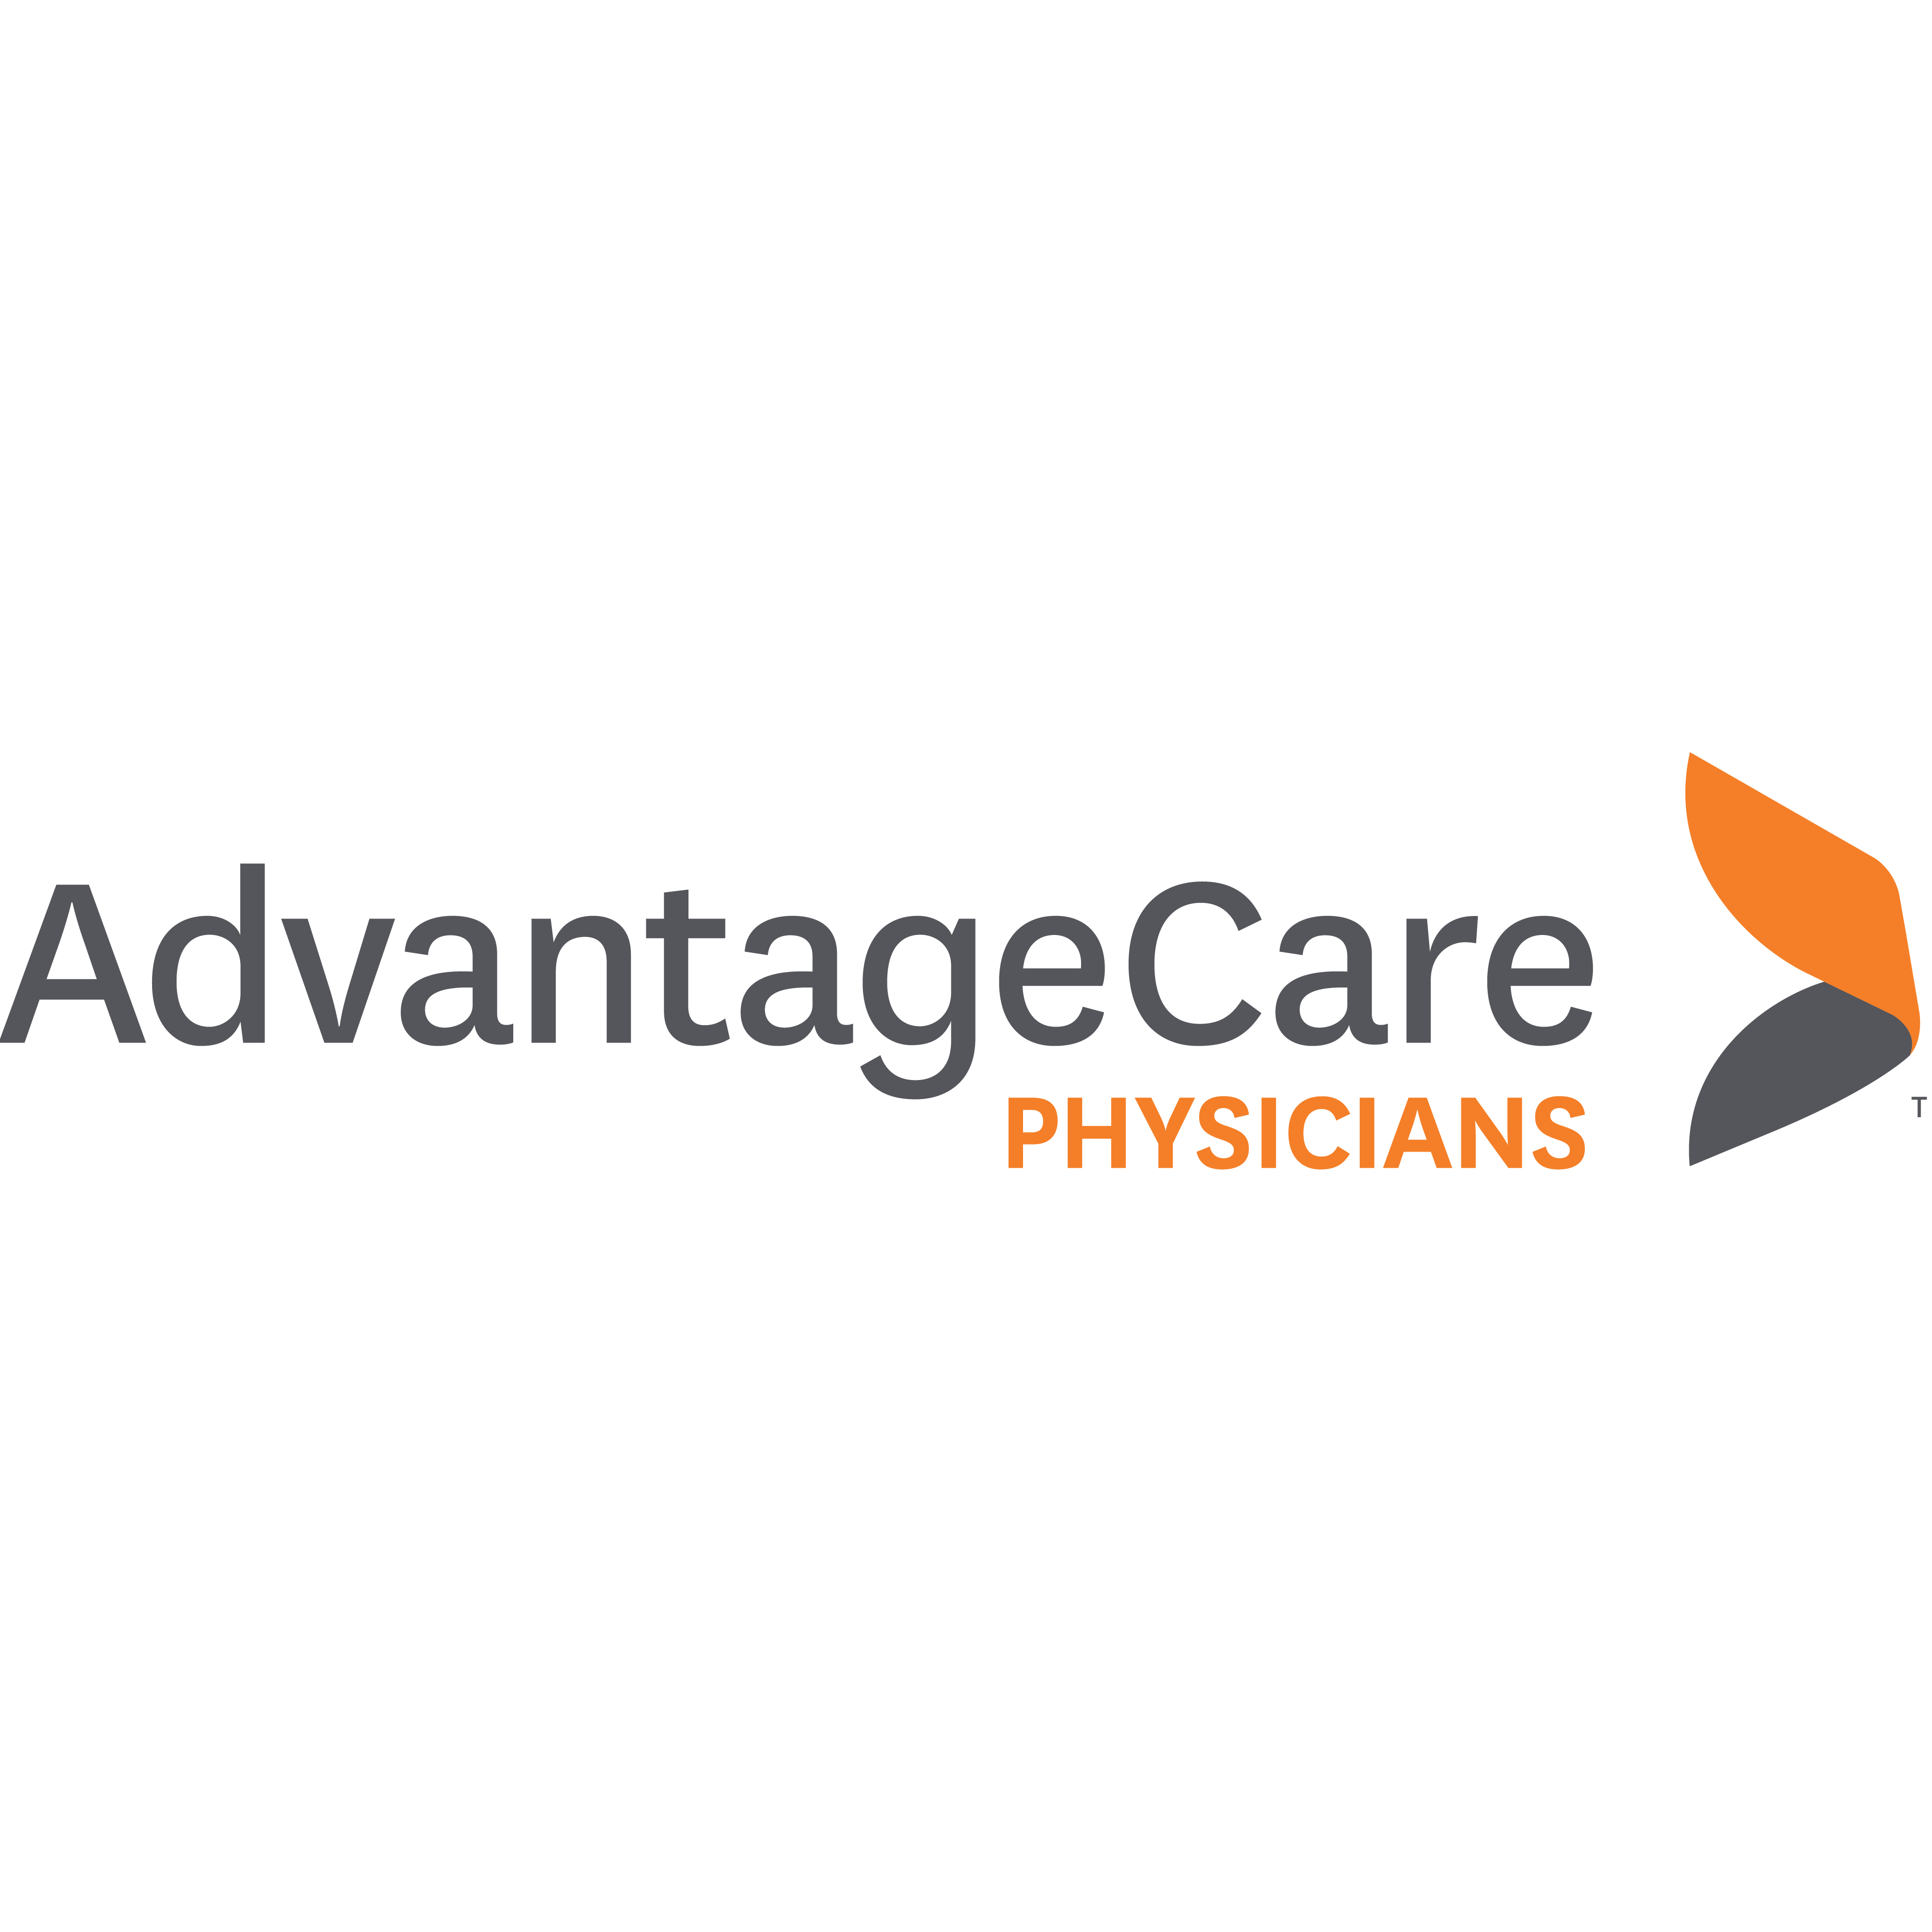 AdvantageCare Physicians - Harlem Medical Office Logo